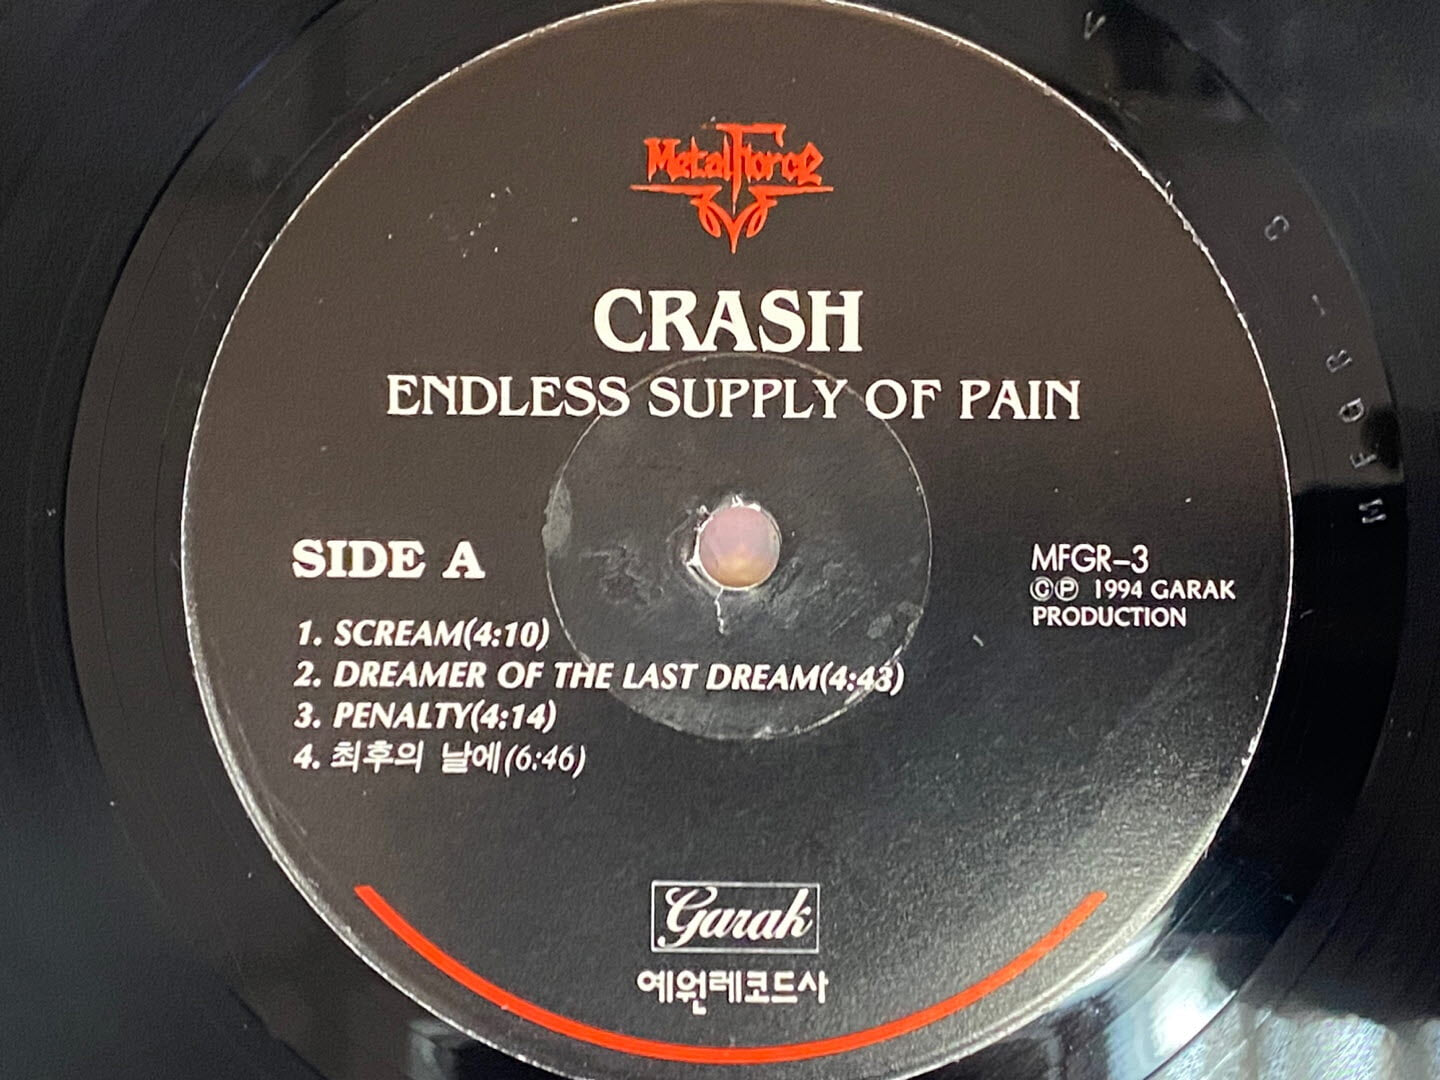 [LP] 크래쉬 (Crash) - 1집 Endless Supply Of Pain LP [싸인LP] [예원레코드 KMFGR-3]